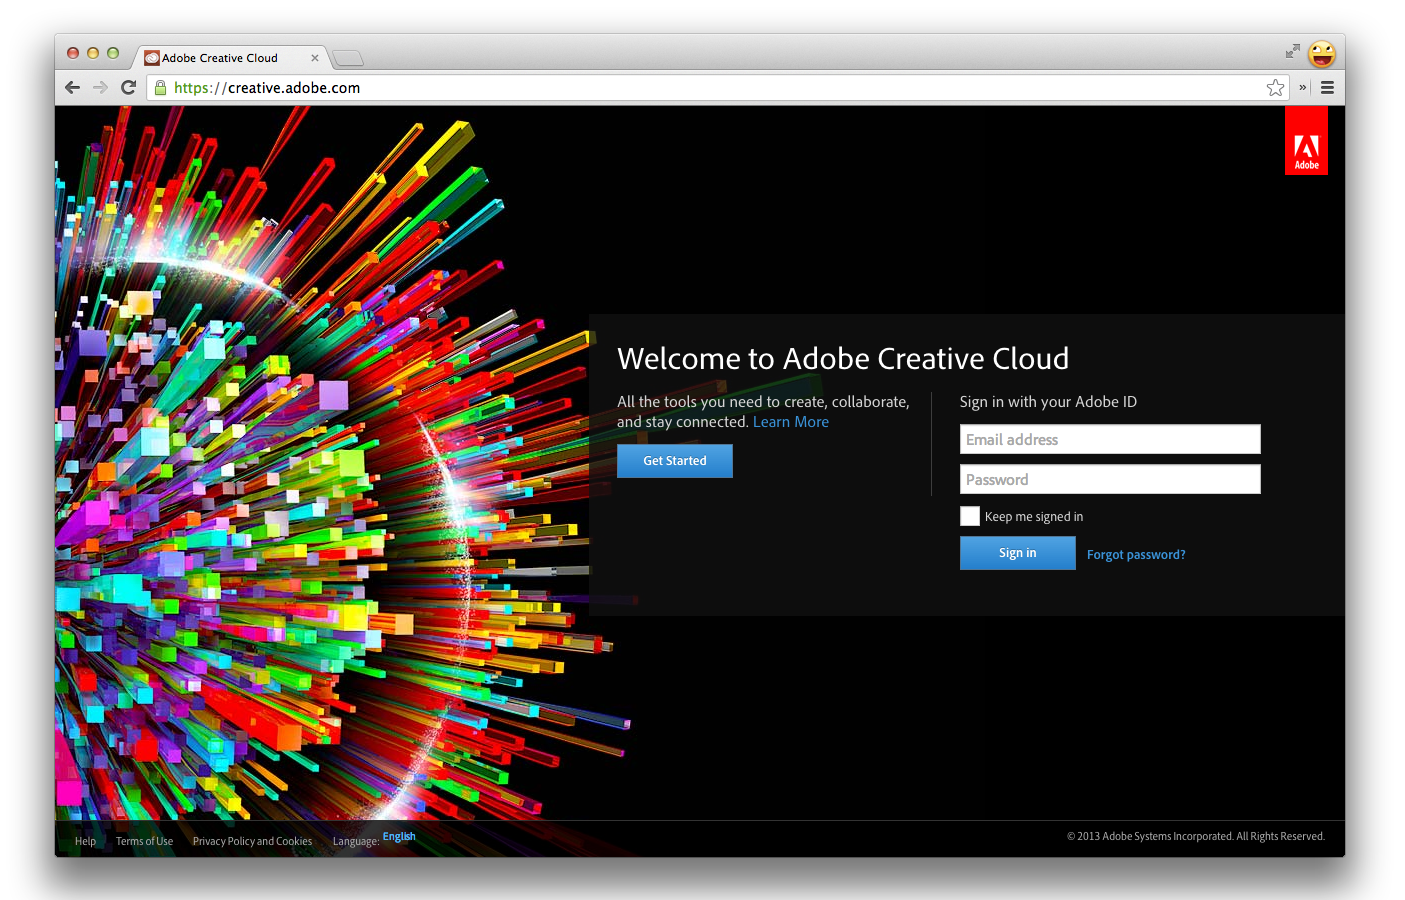 Подписка Adobe Creative Cloud включает Edge Inspect